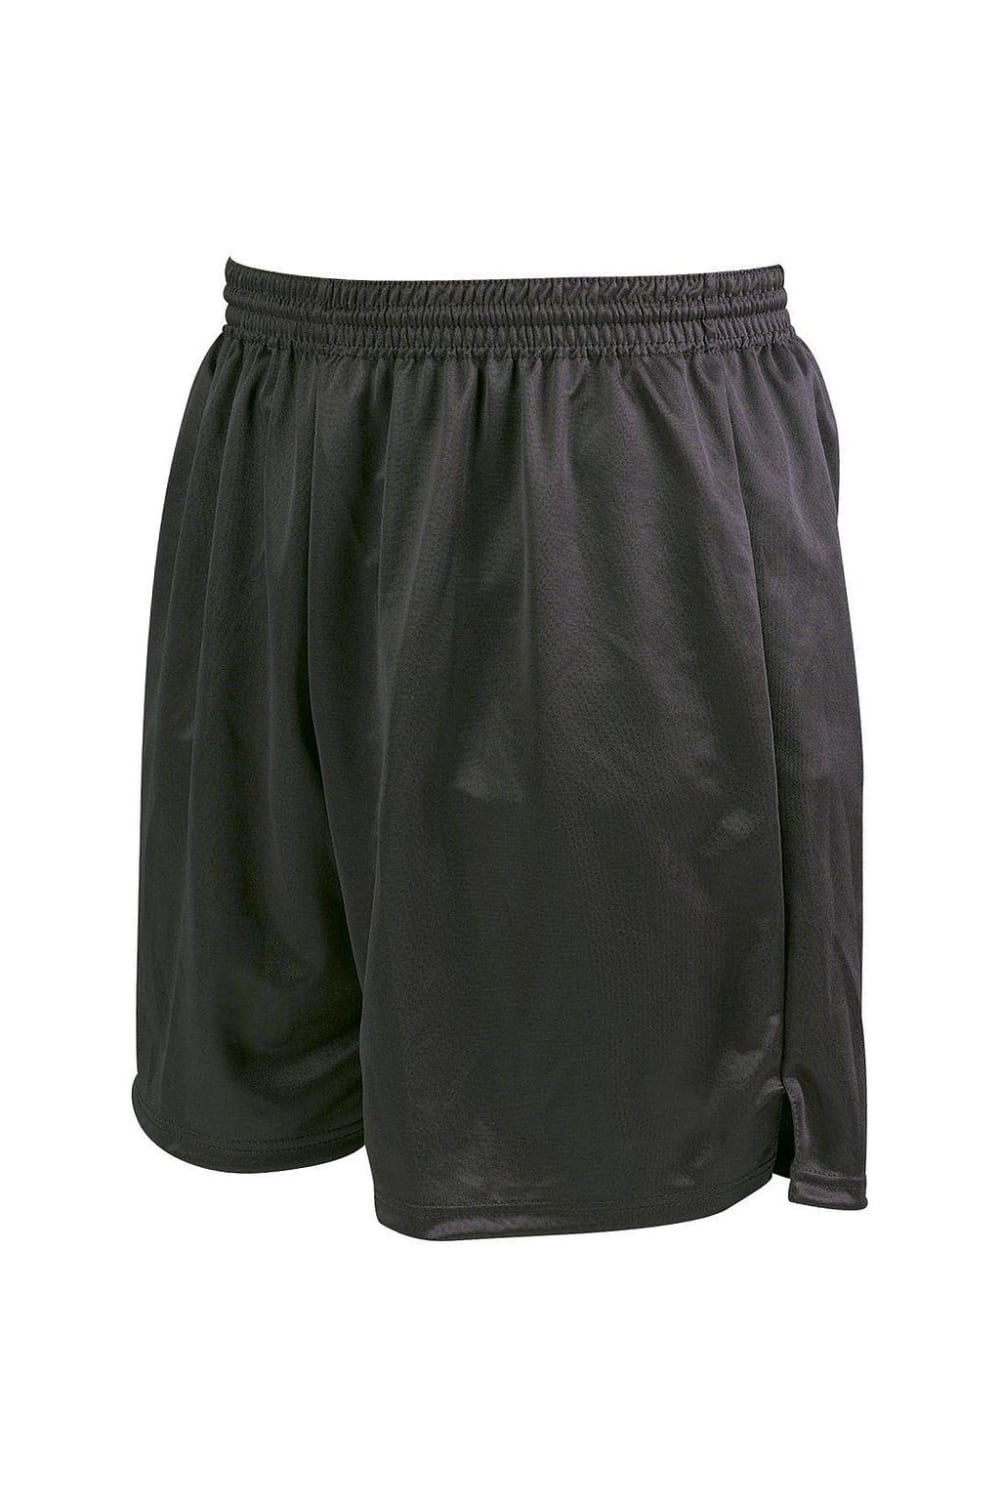 Precision Unisex Adult Attack Shorts (Black)